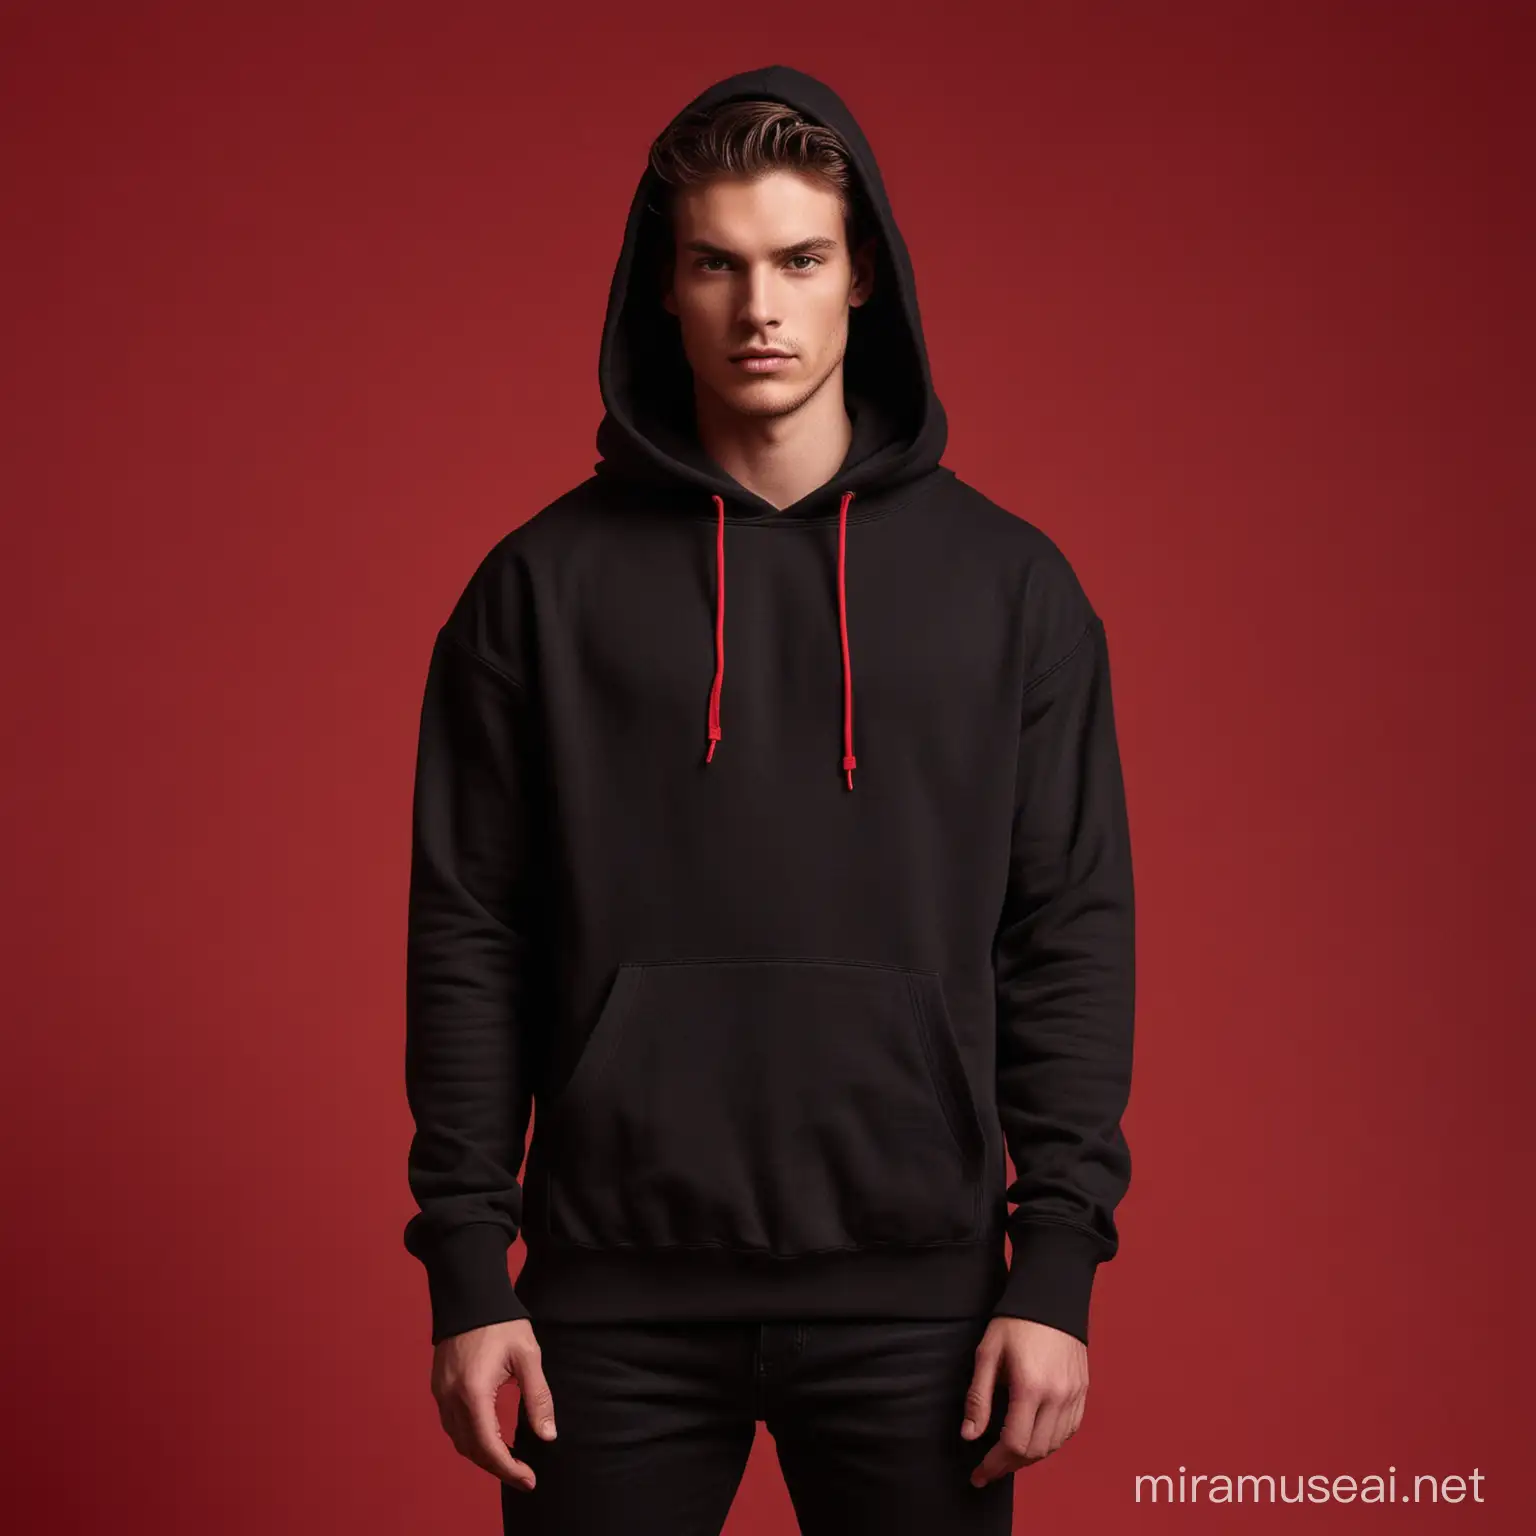 FullLength Male Model in Black Hoodie on Red Background